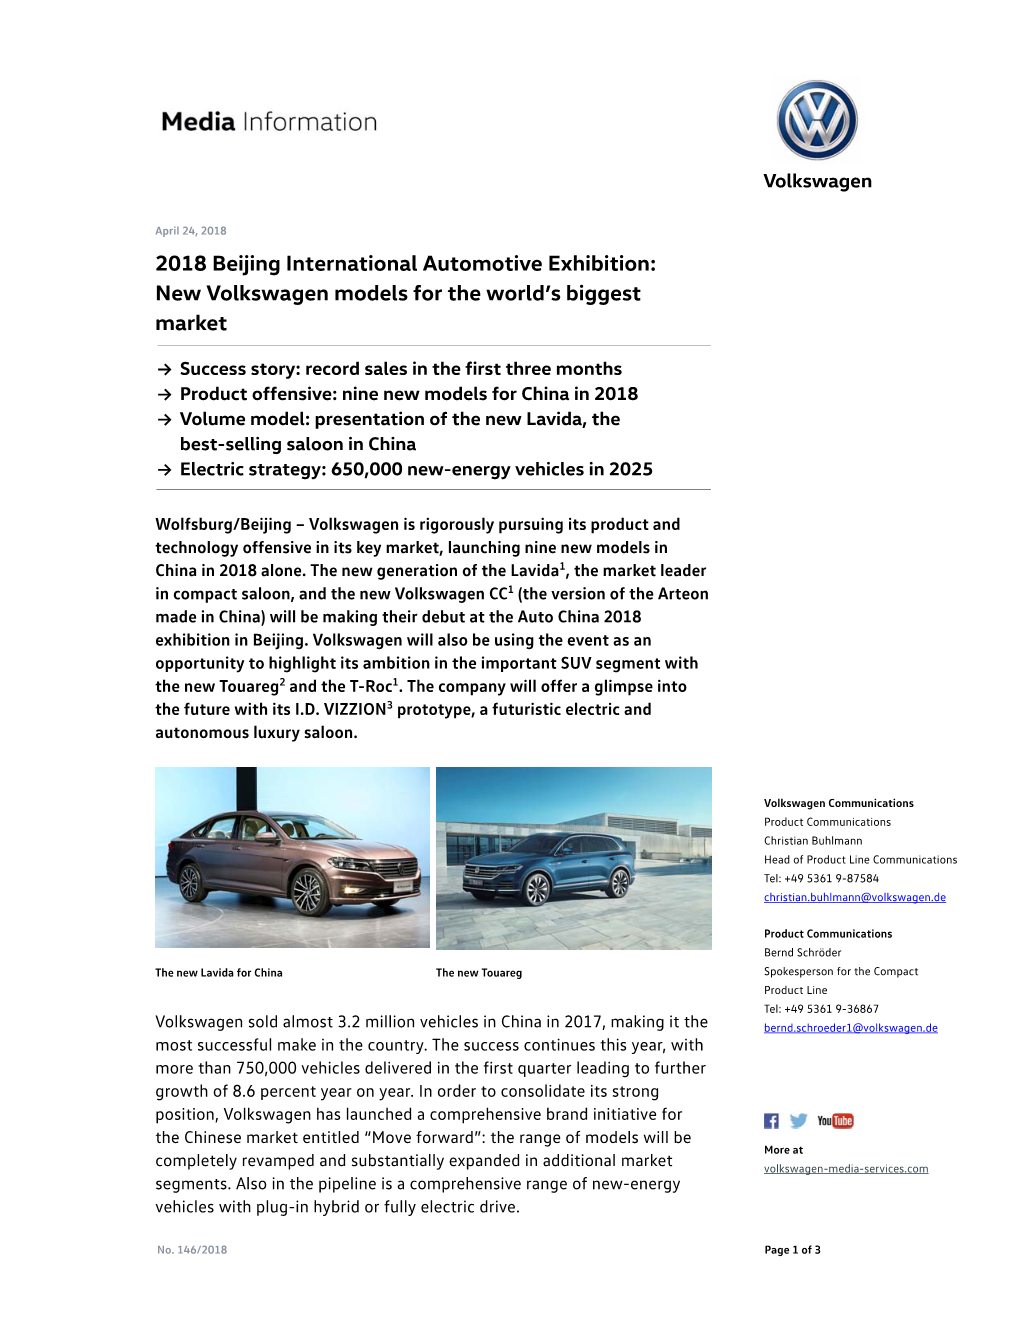 2018 Beijing International Automotive Exhibition: New Volkswagen Models for the World’S Biggest Market